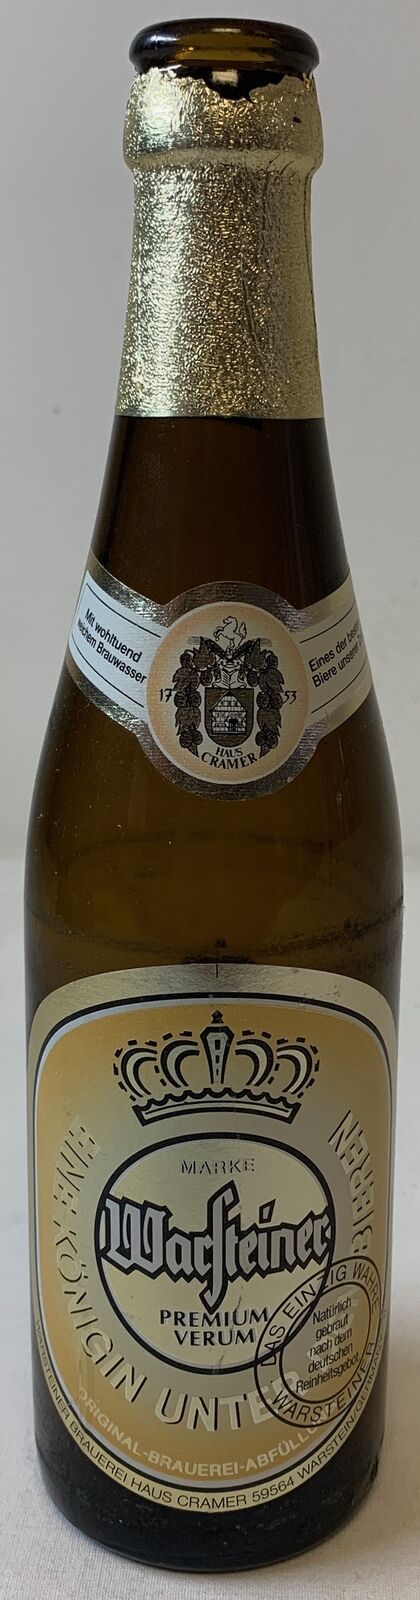 1995 WARSTEINER German beer bottle with label